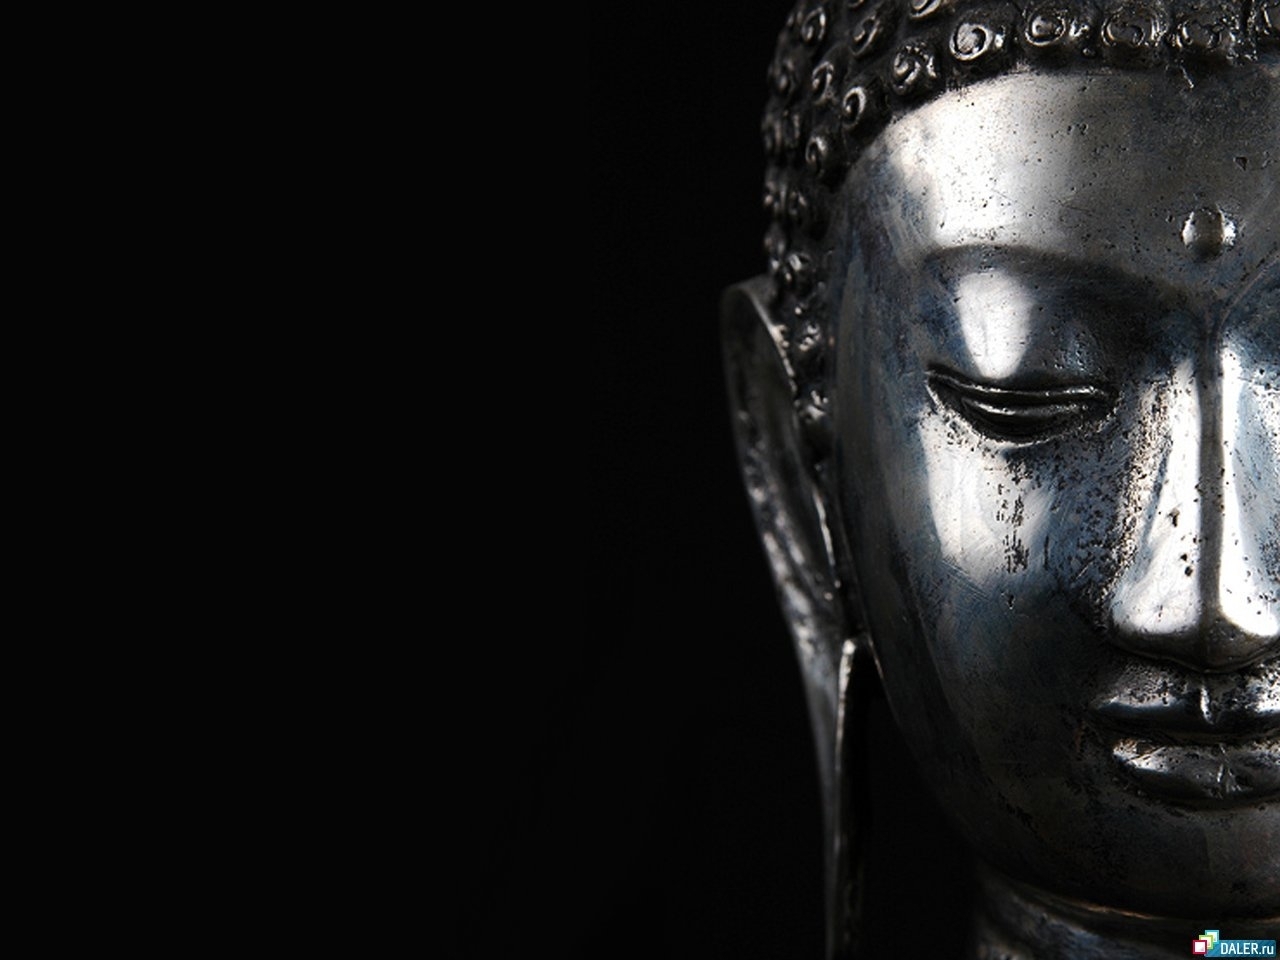  Black Gautam Buddha iPhone Full HD Wallpaper Download  MyGodImages